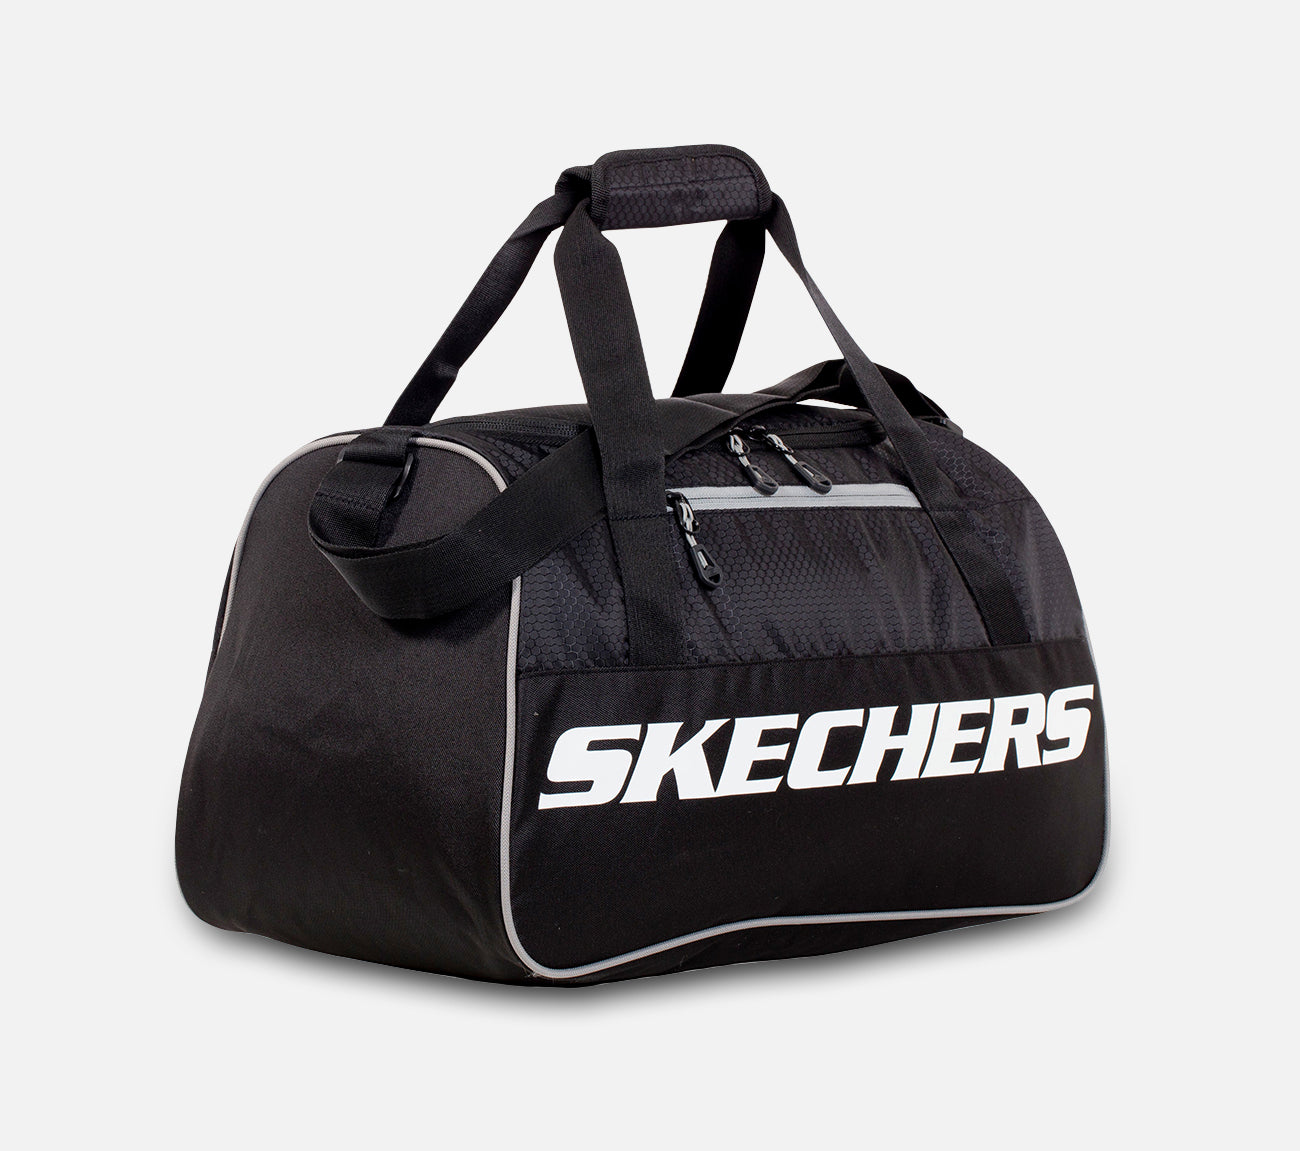 Skechers Duffelbag Bags Skechers